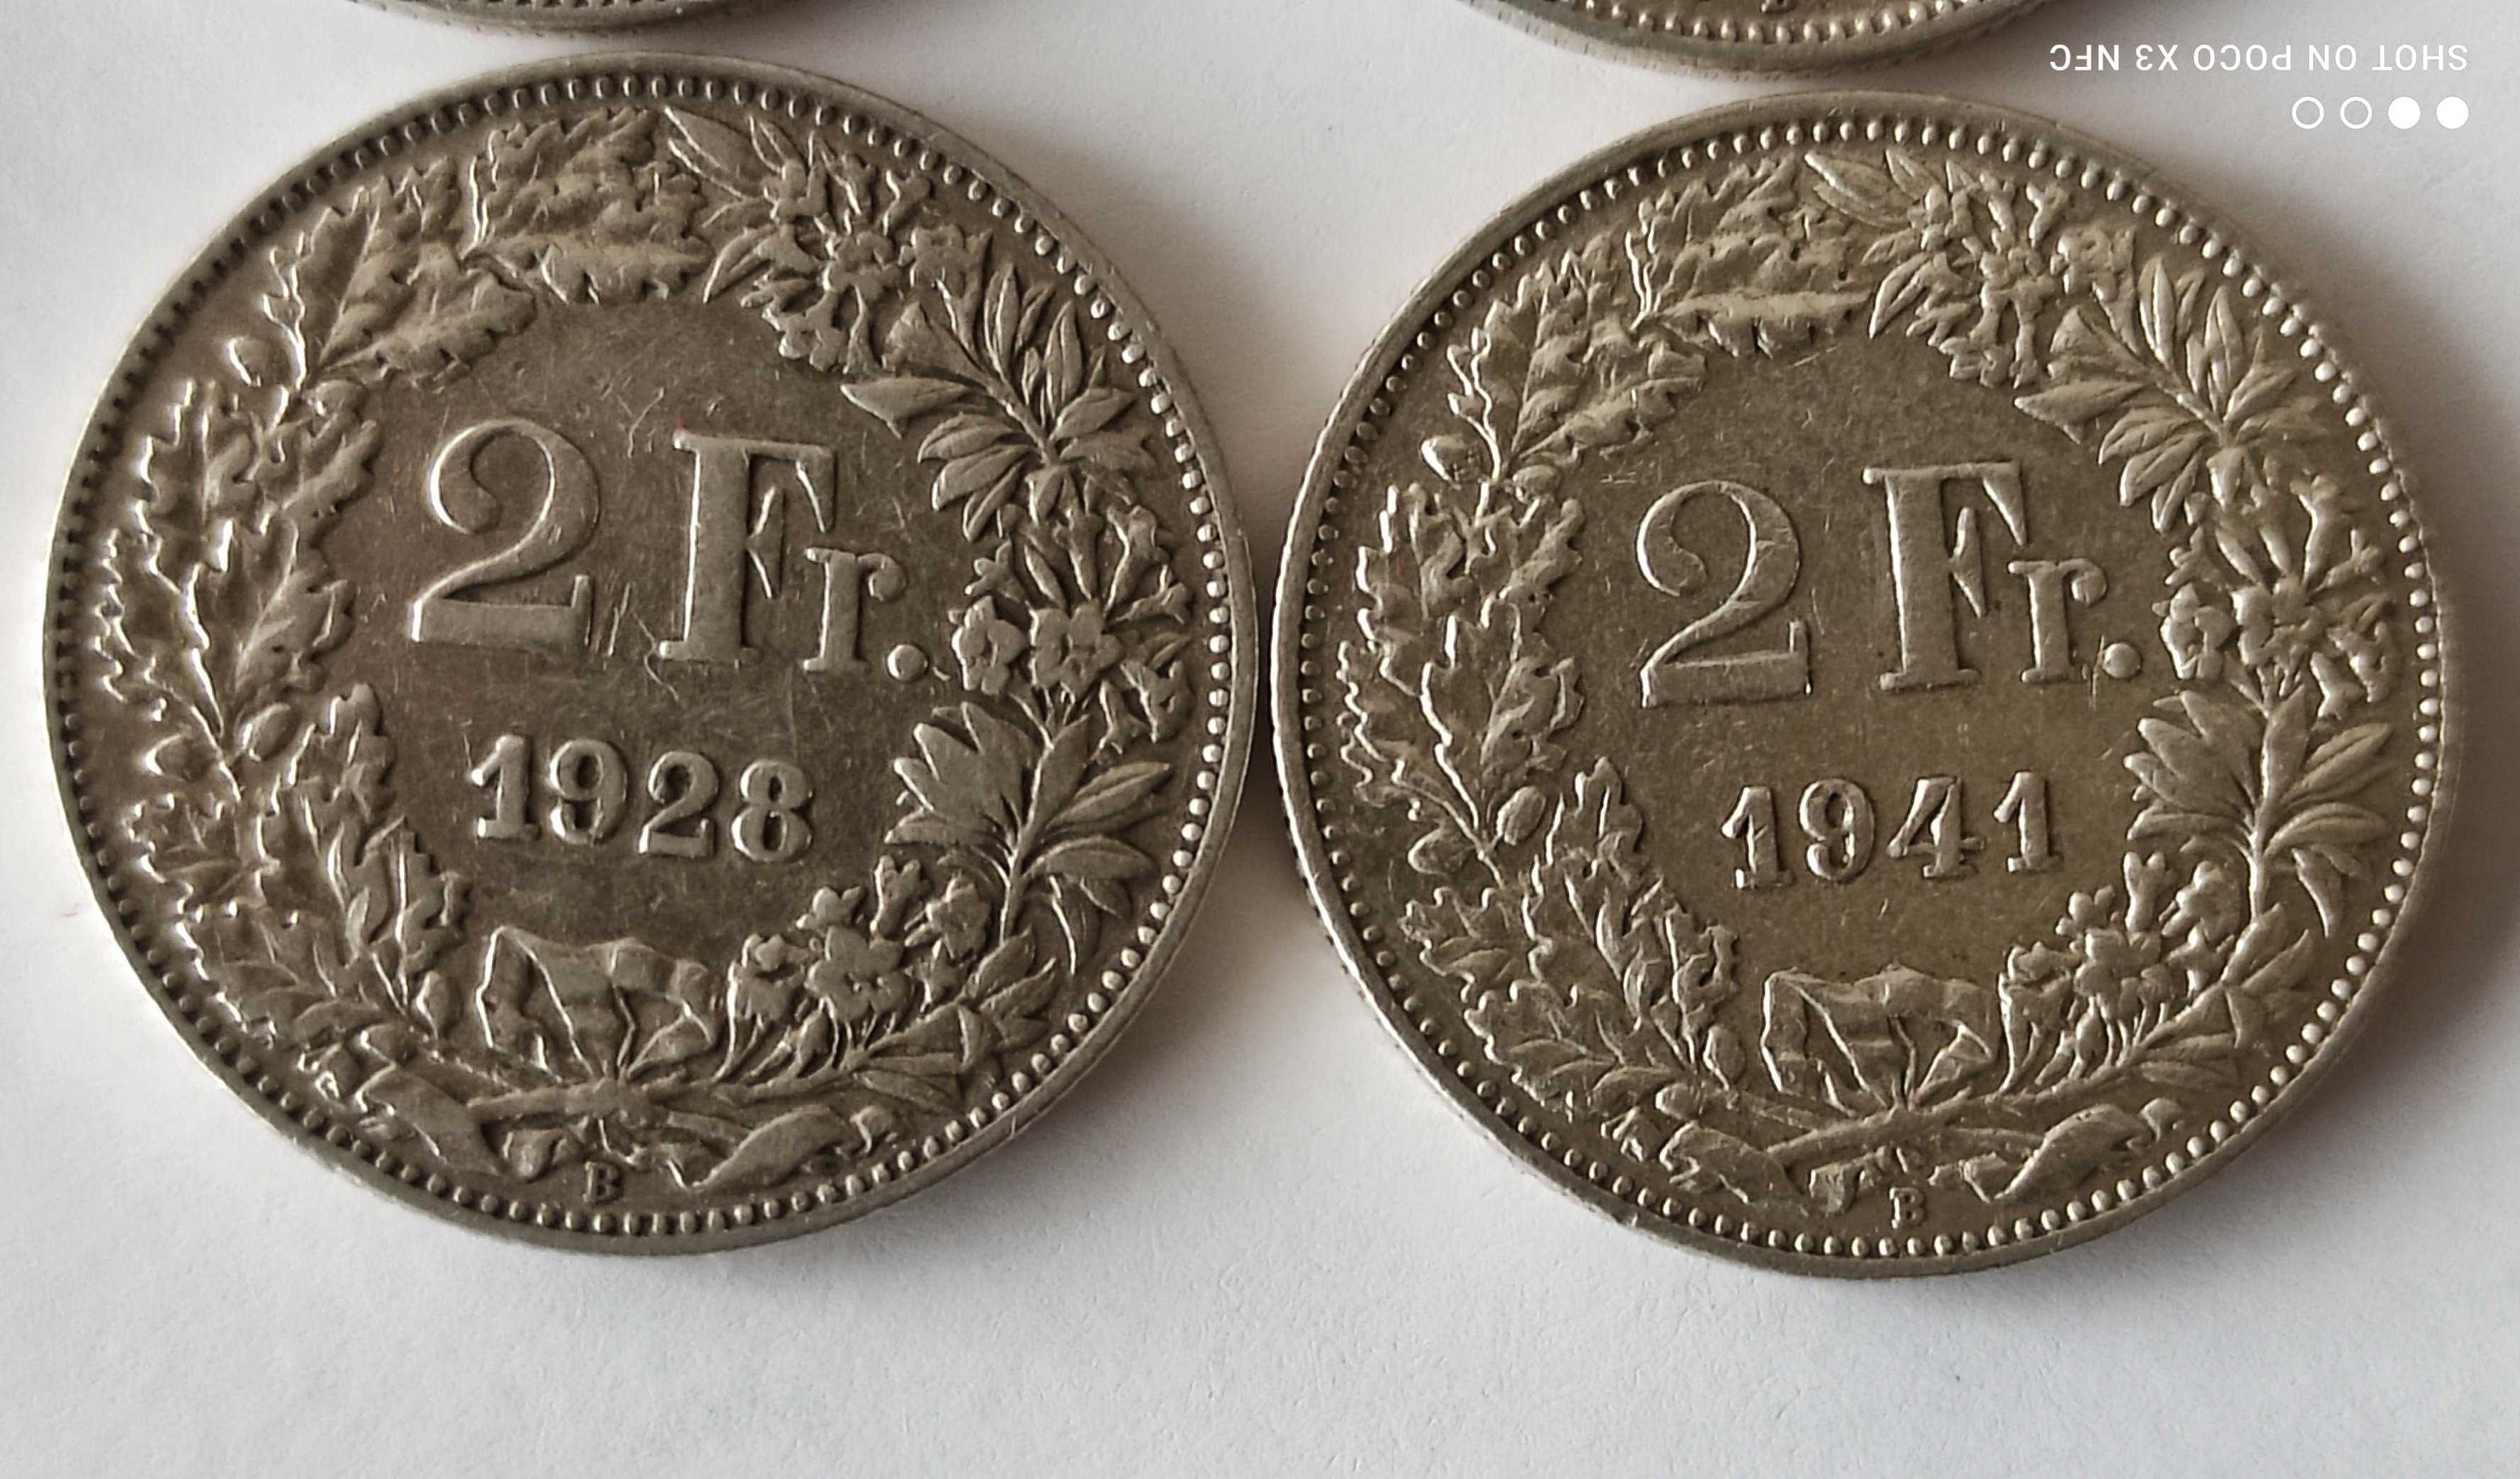 Monety srebrne zestaw 4 sztuk Szwajcaria 2 franki ładne srebro Ag